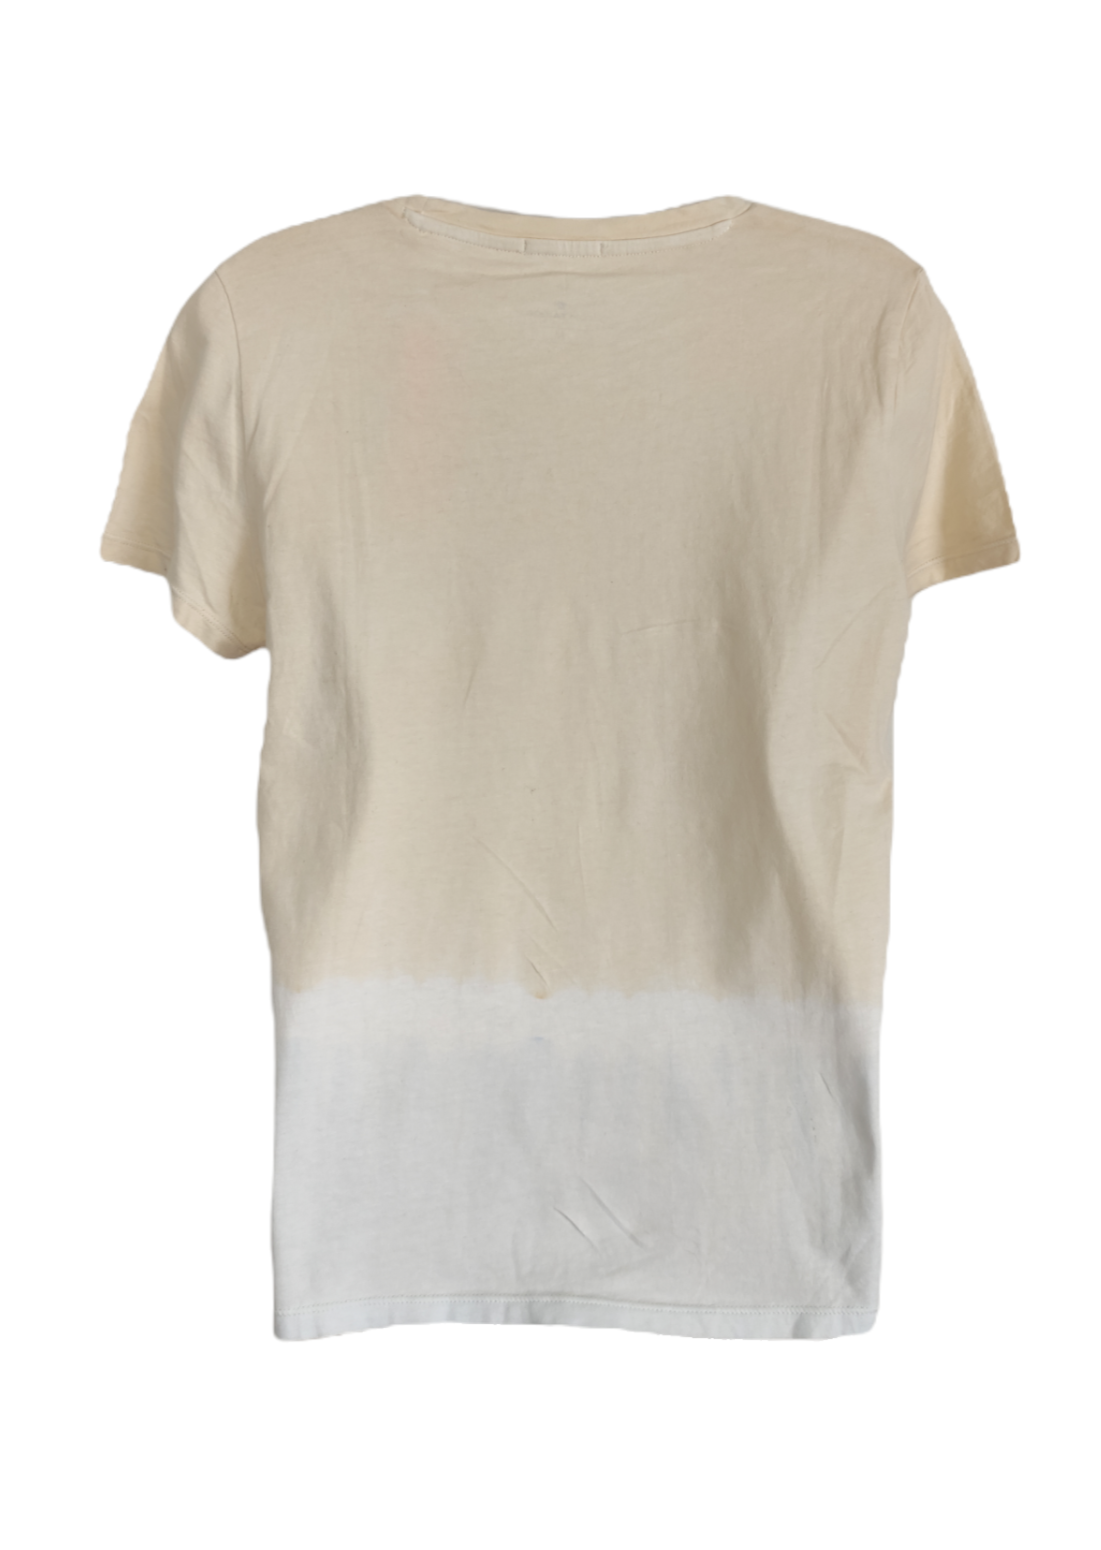 STOCK Γυναικεία Μπλούζα TOM TAILOR σε Μπεζ- Λευκό χρώμα (Medium)